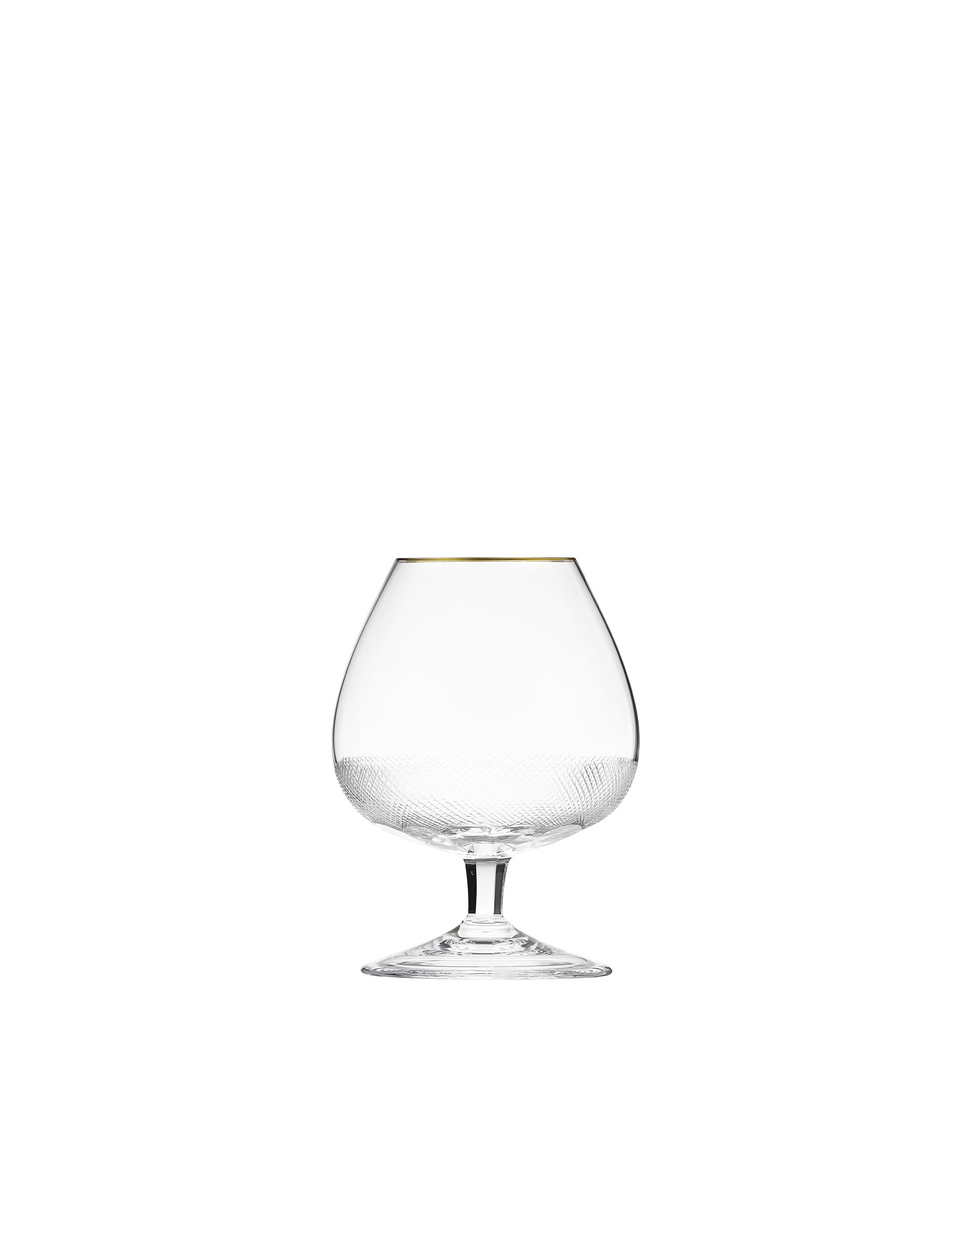 Royal sklenka na brandy, 320 ml